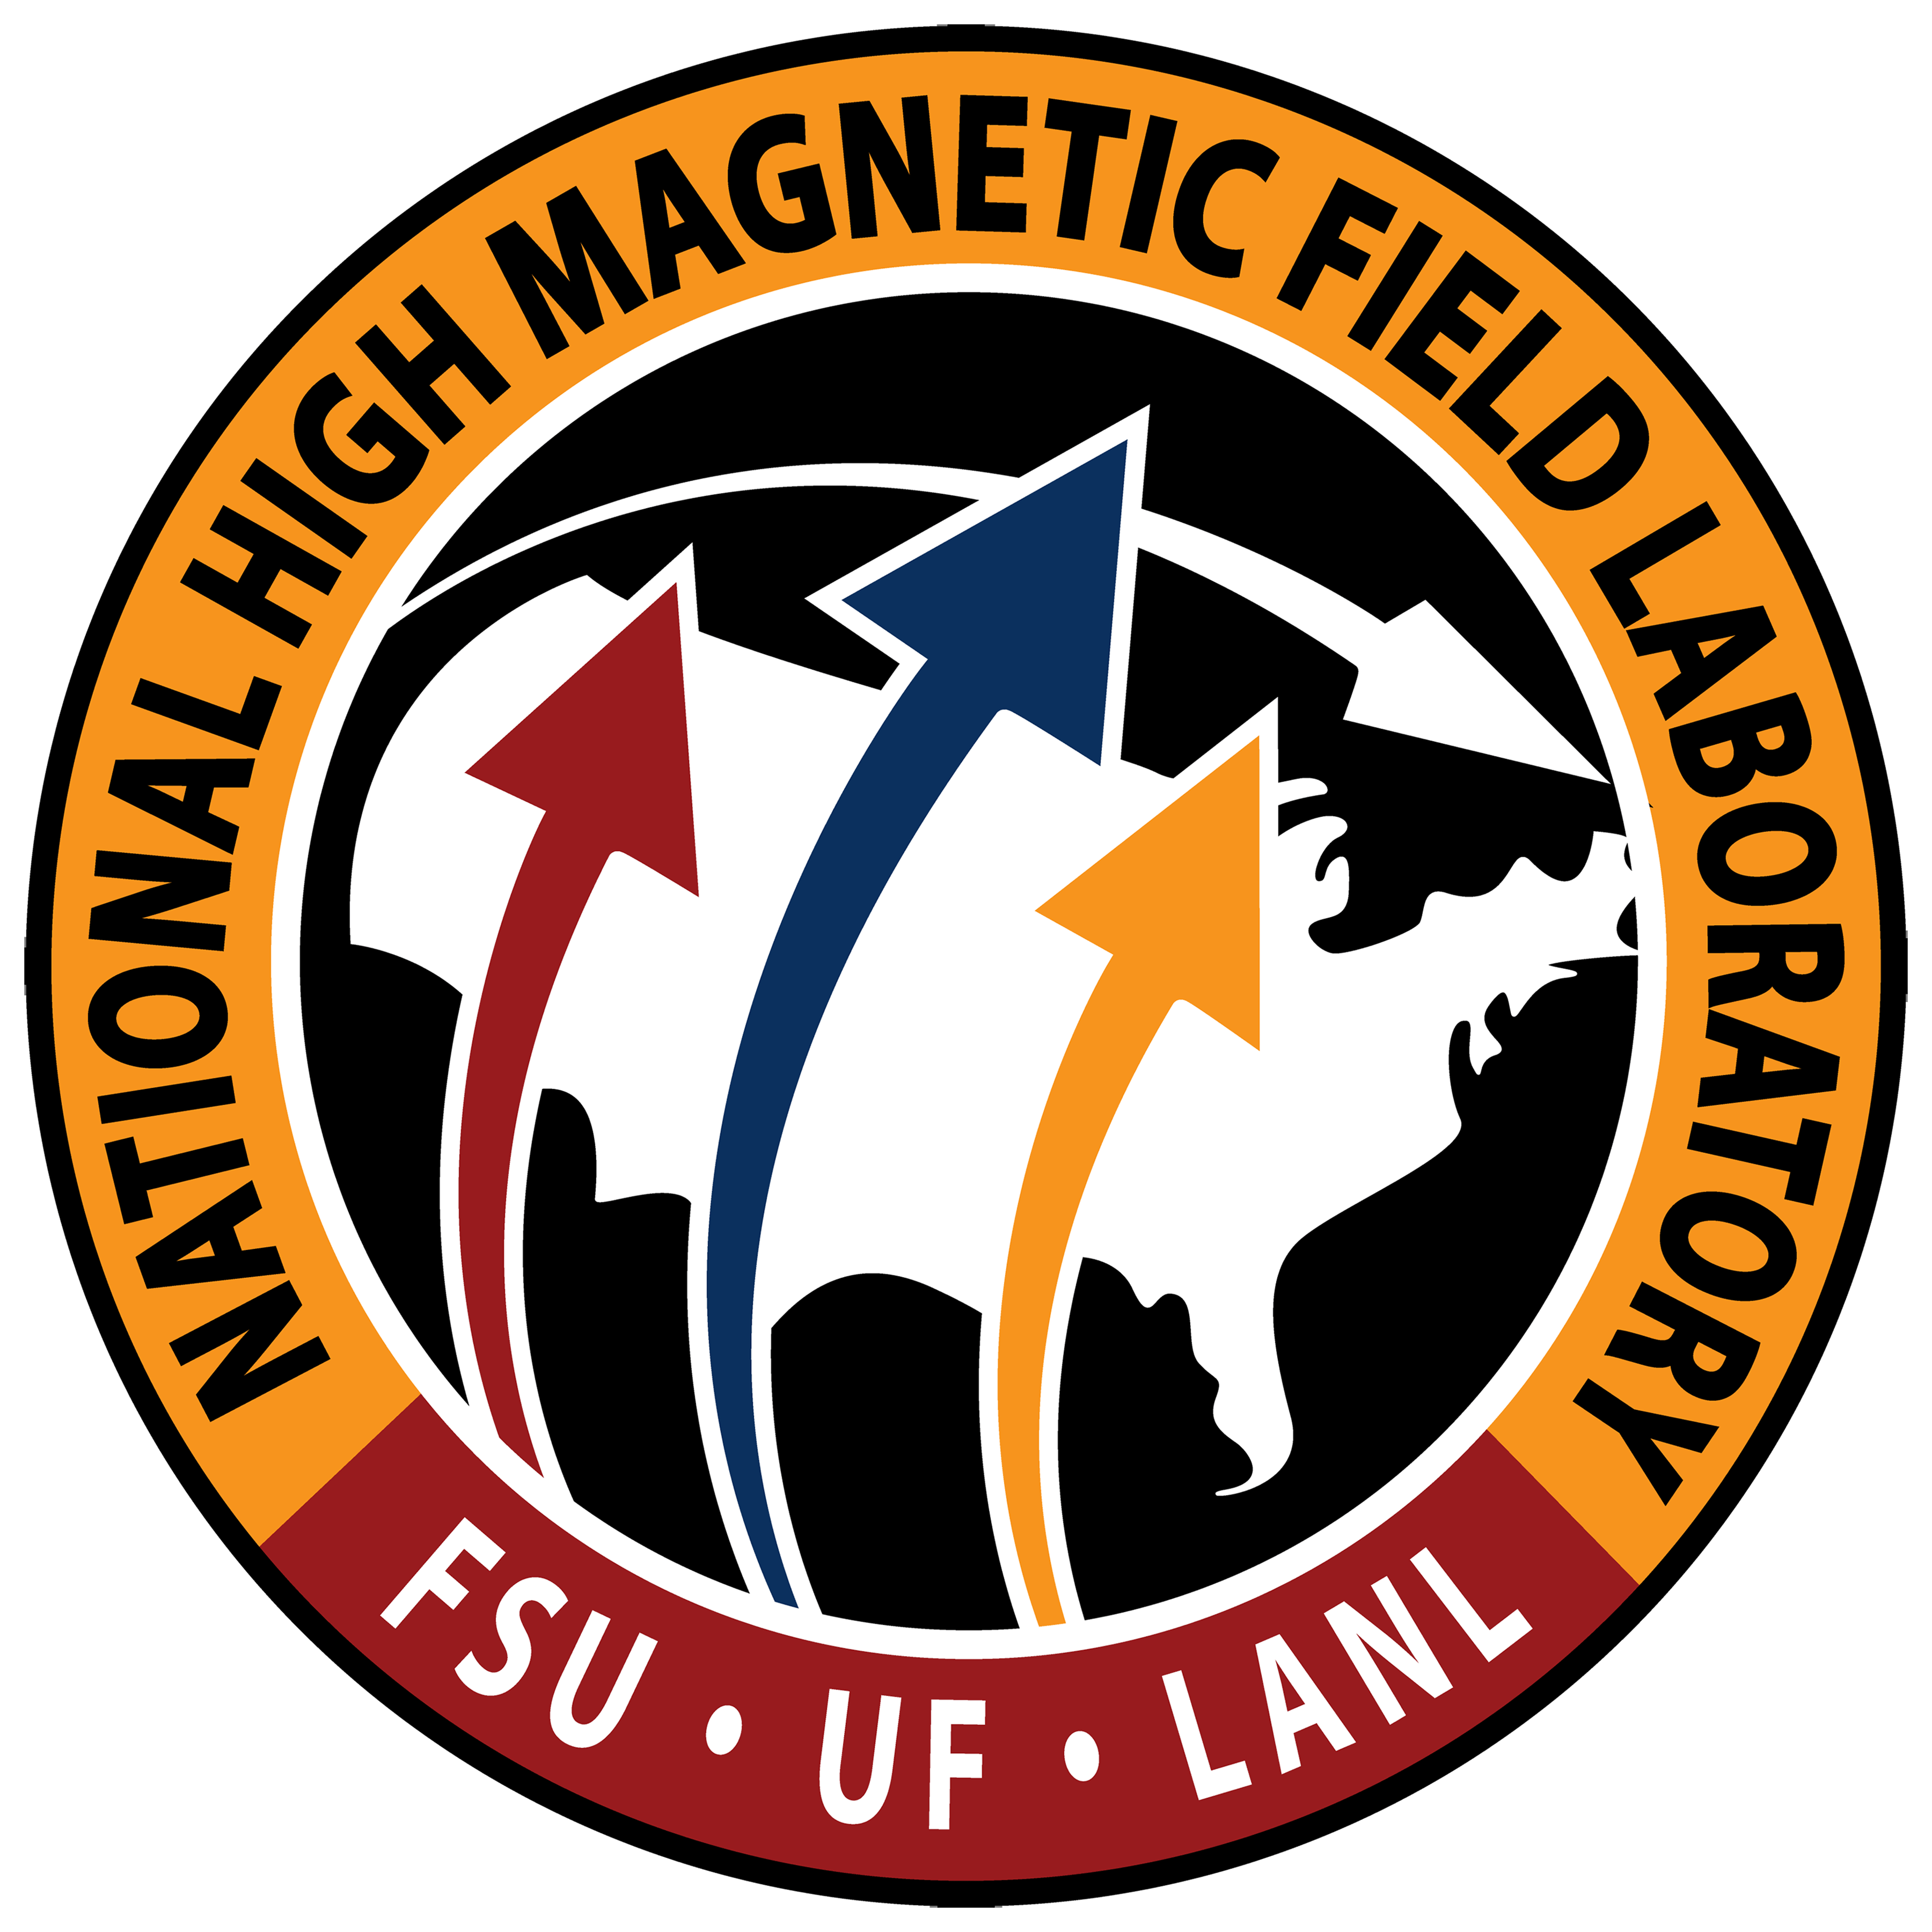 LANL Logo - public.magnet.fsu.edu - /Logos